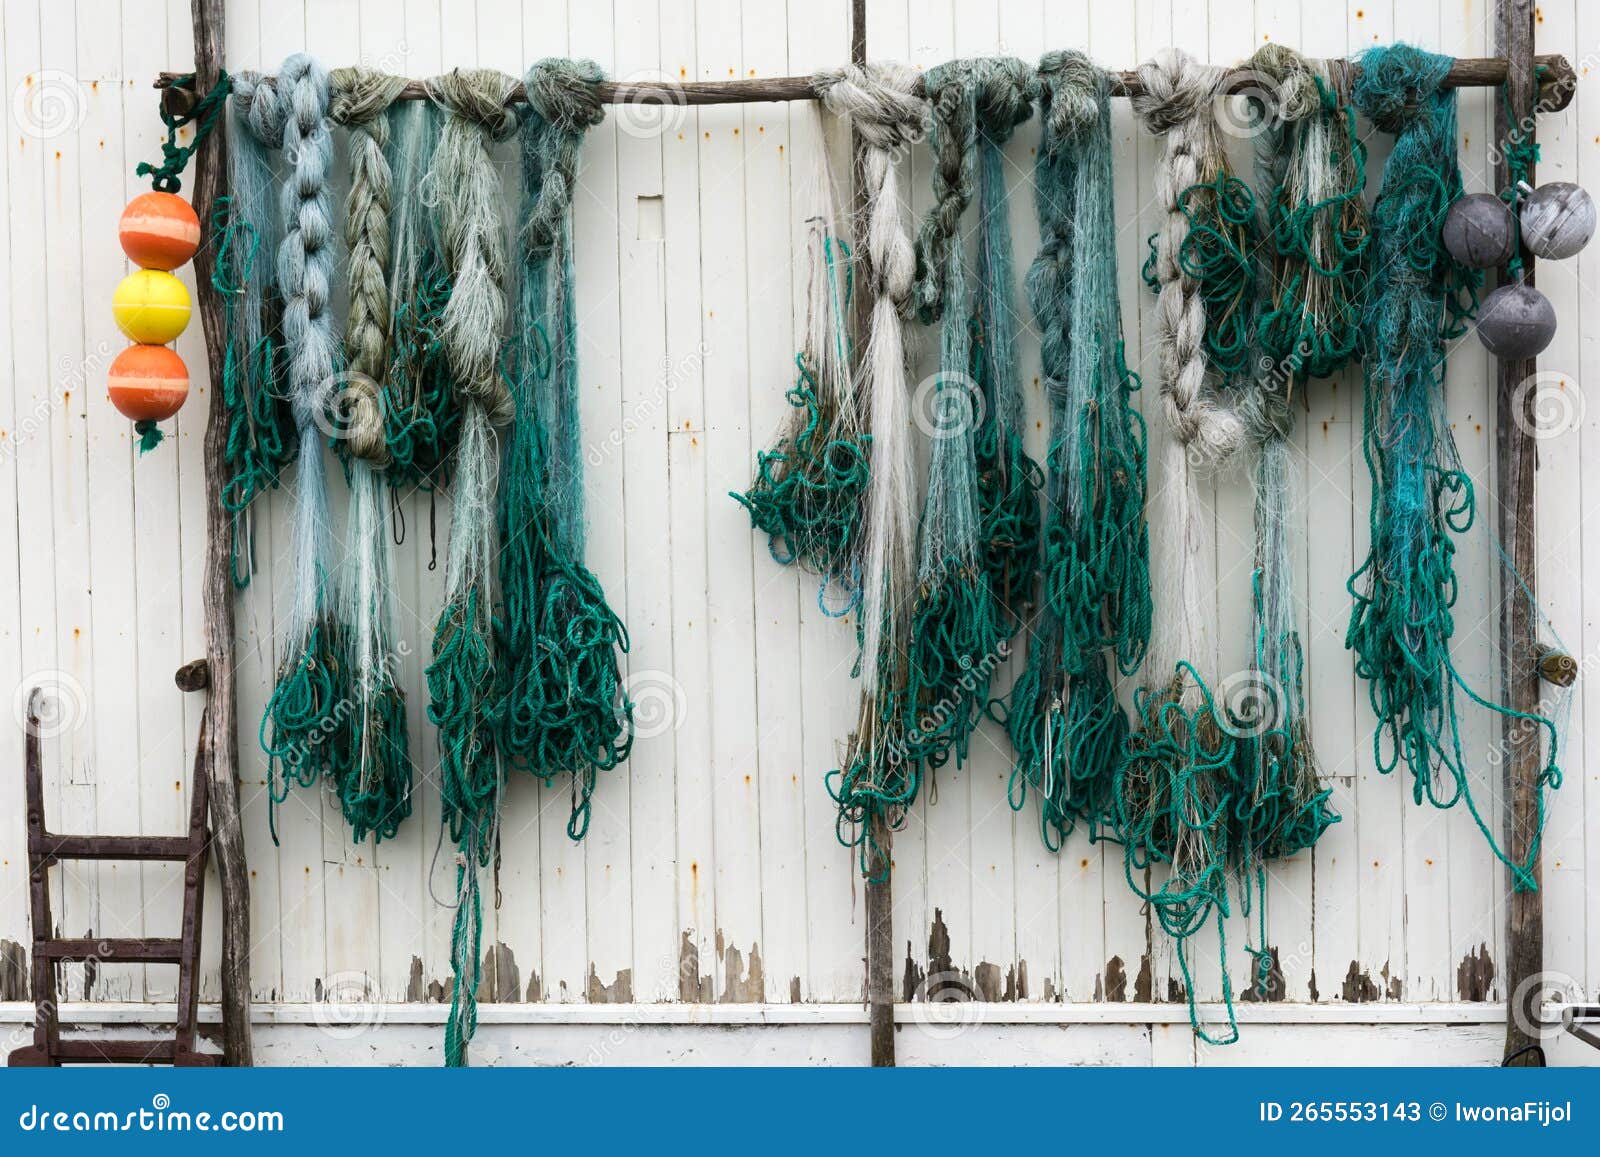 Premium Photo  Blue fishing net on white wooden wall